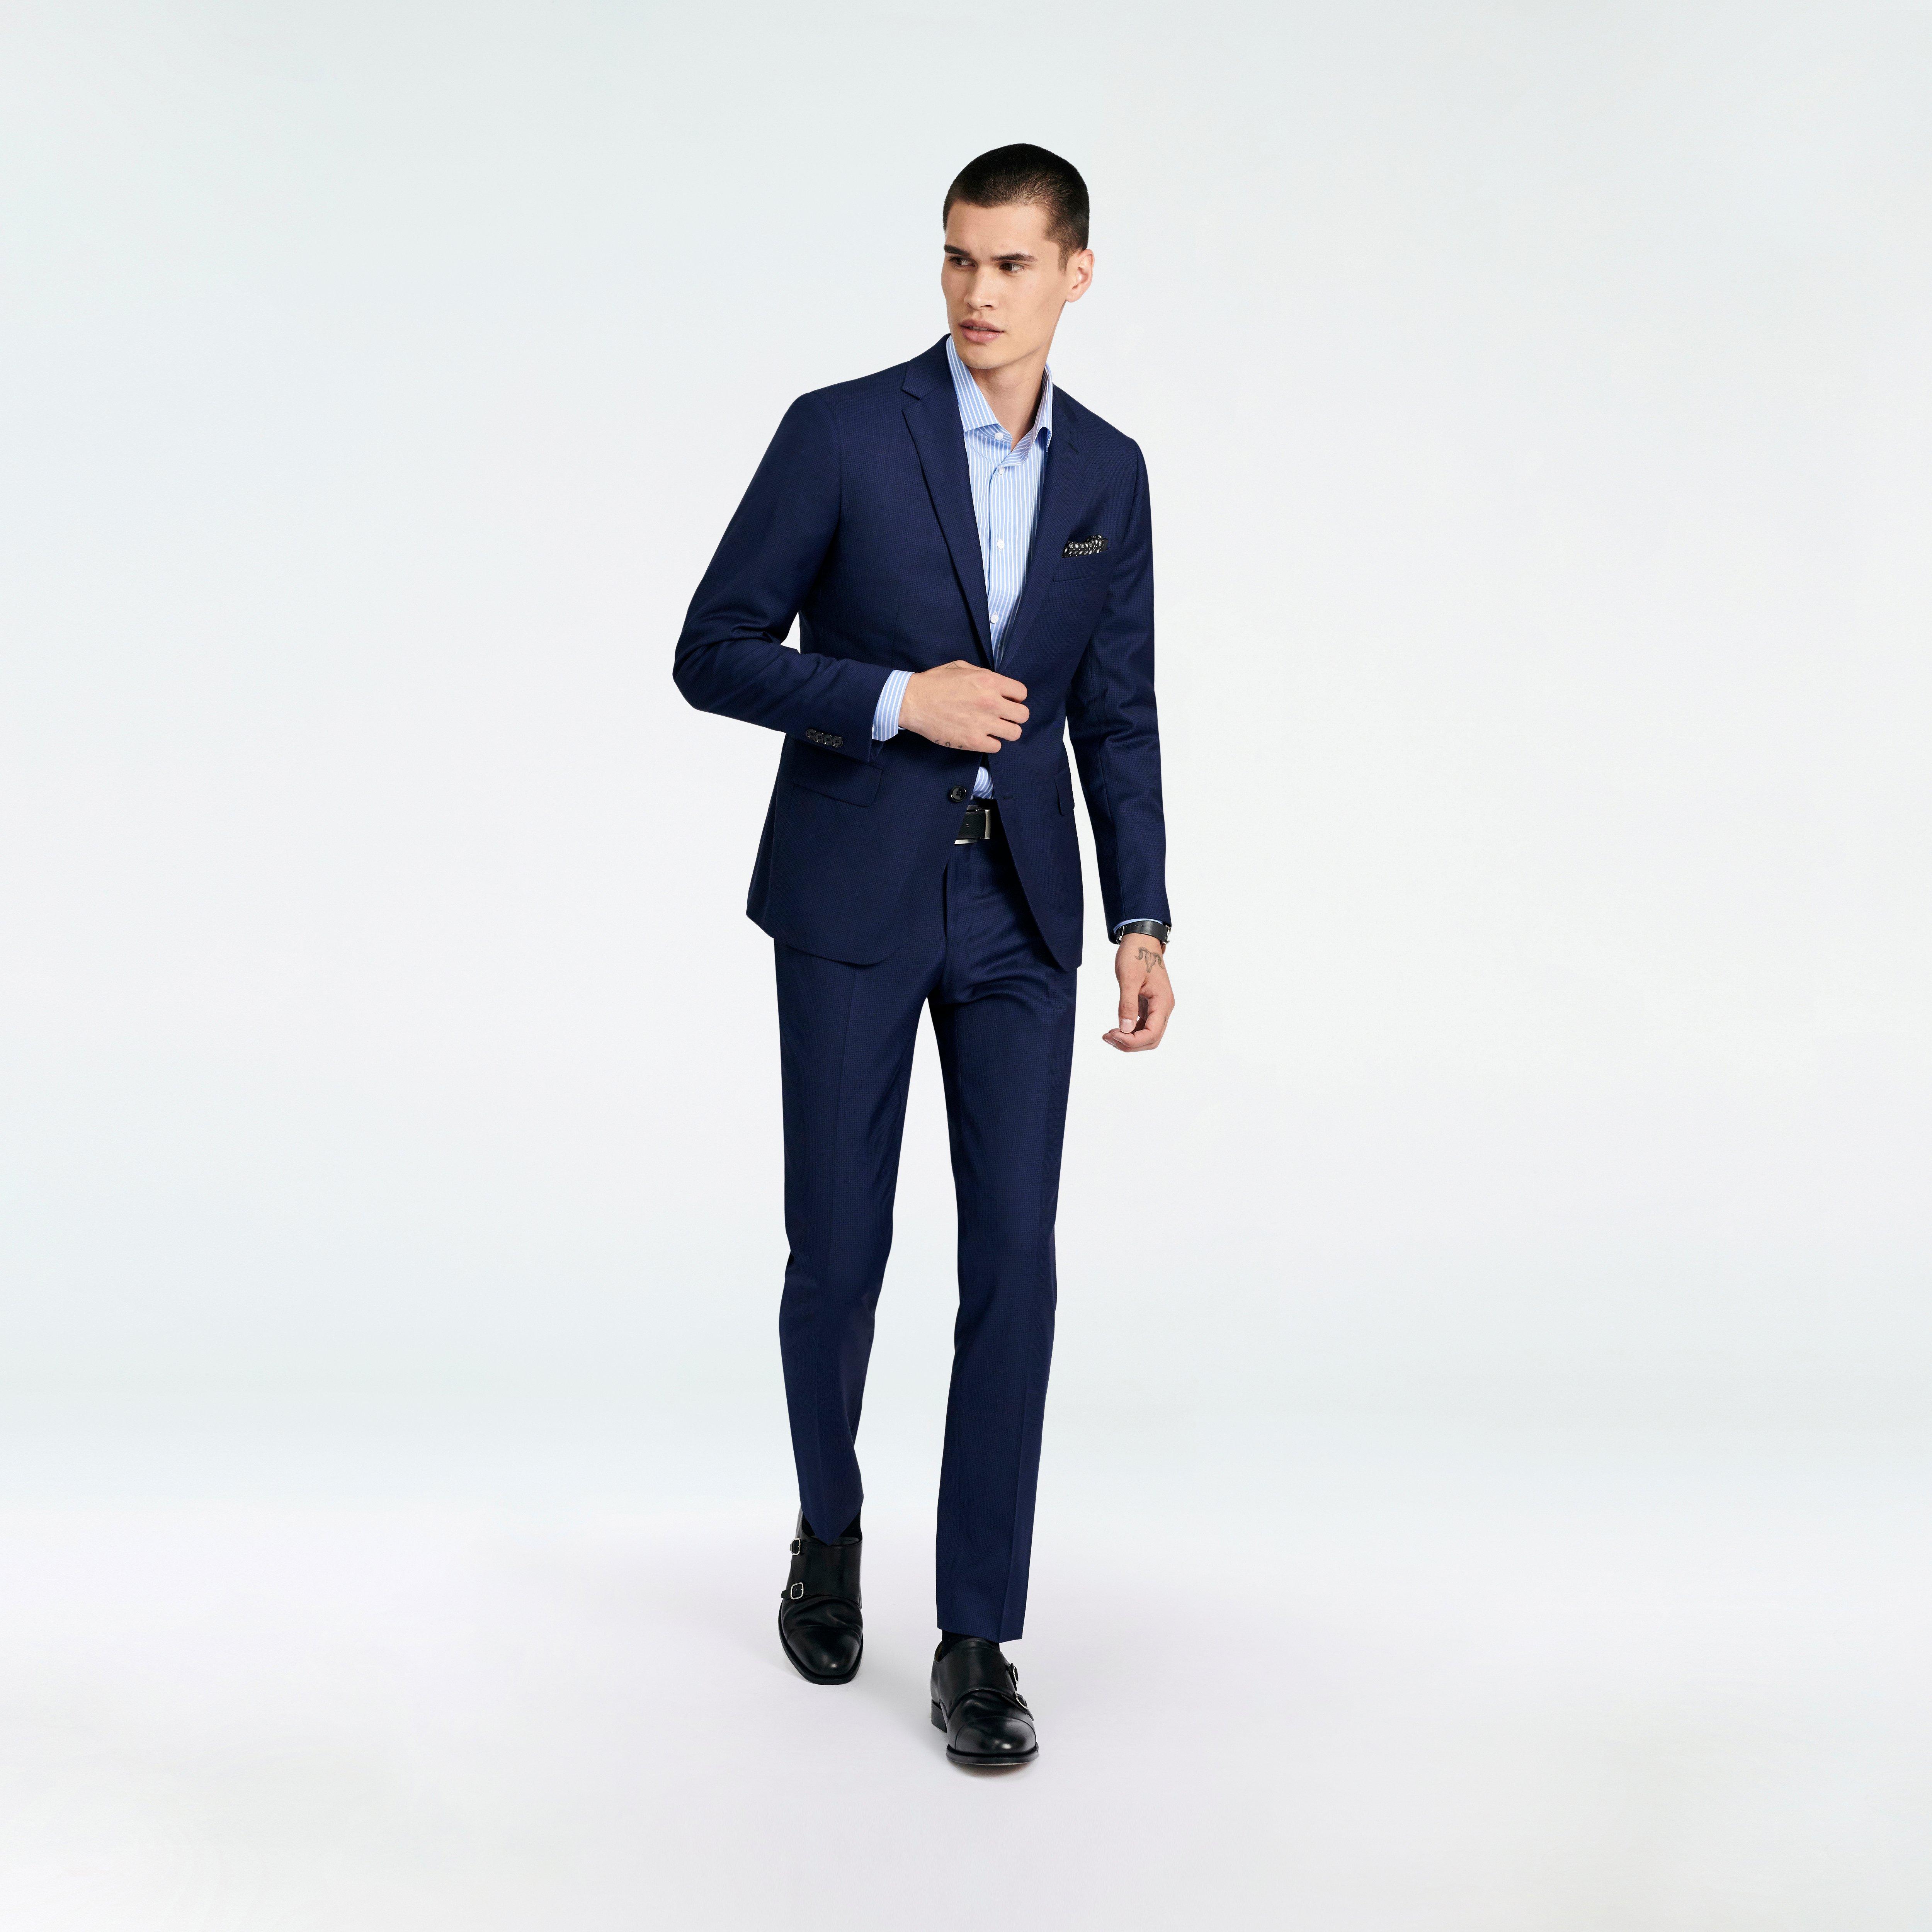 Men's Custom Suits - Malvern Houndstooth Navy Suit | INDOCHINO